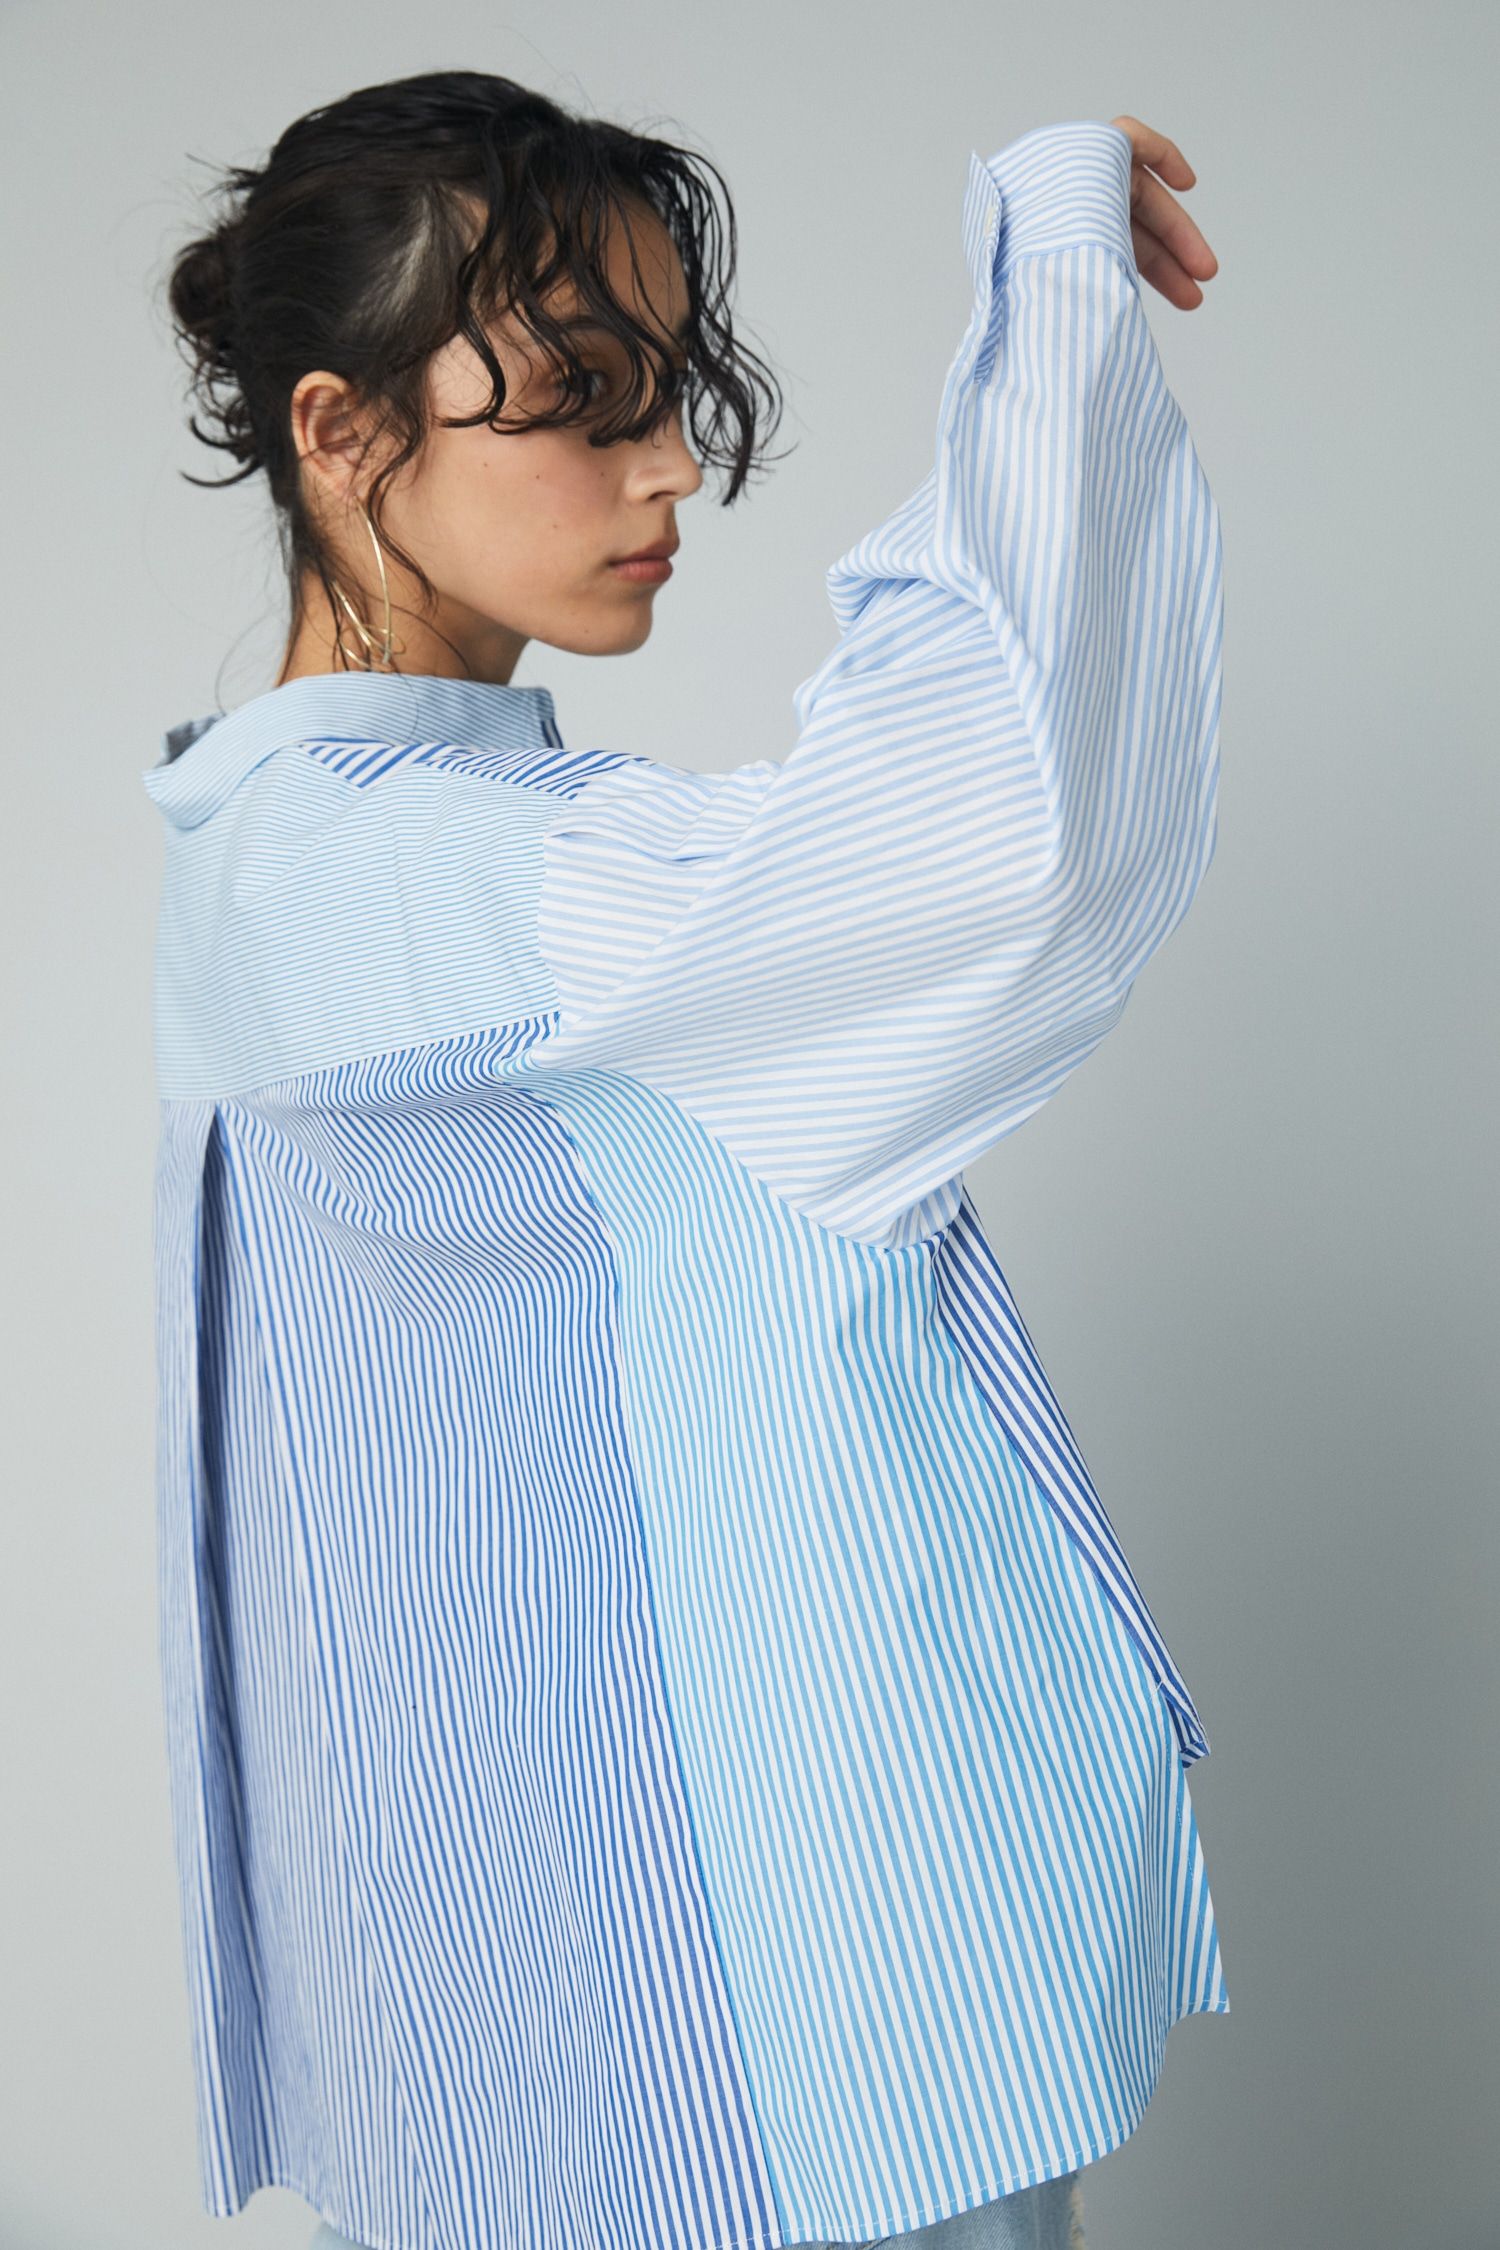 HeRIN.CYE - ストライプシャツ - Strip shirt - 柄NAVY | ADDICT WEB SHOP